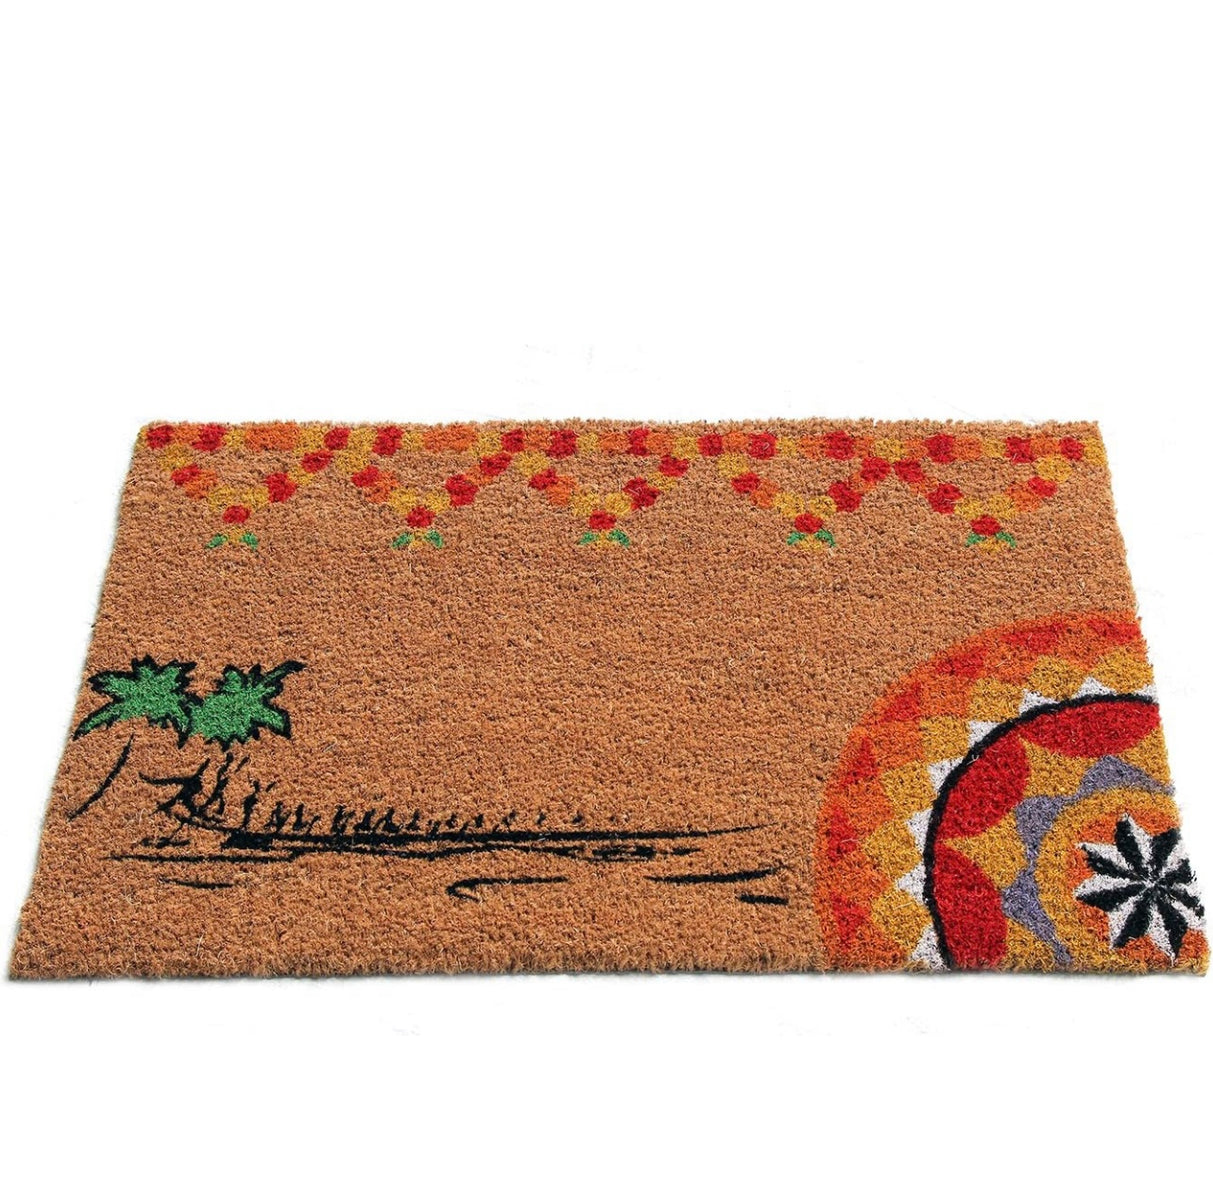 Onam Festival Themed Kerala Printed Natural Coir Entrance Doormat